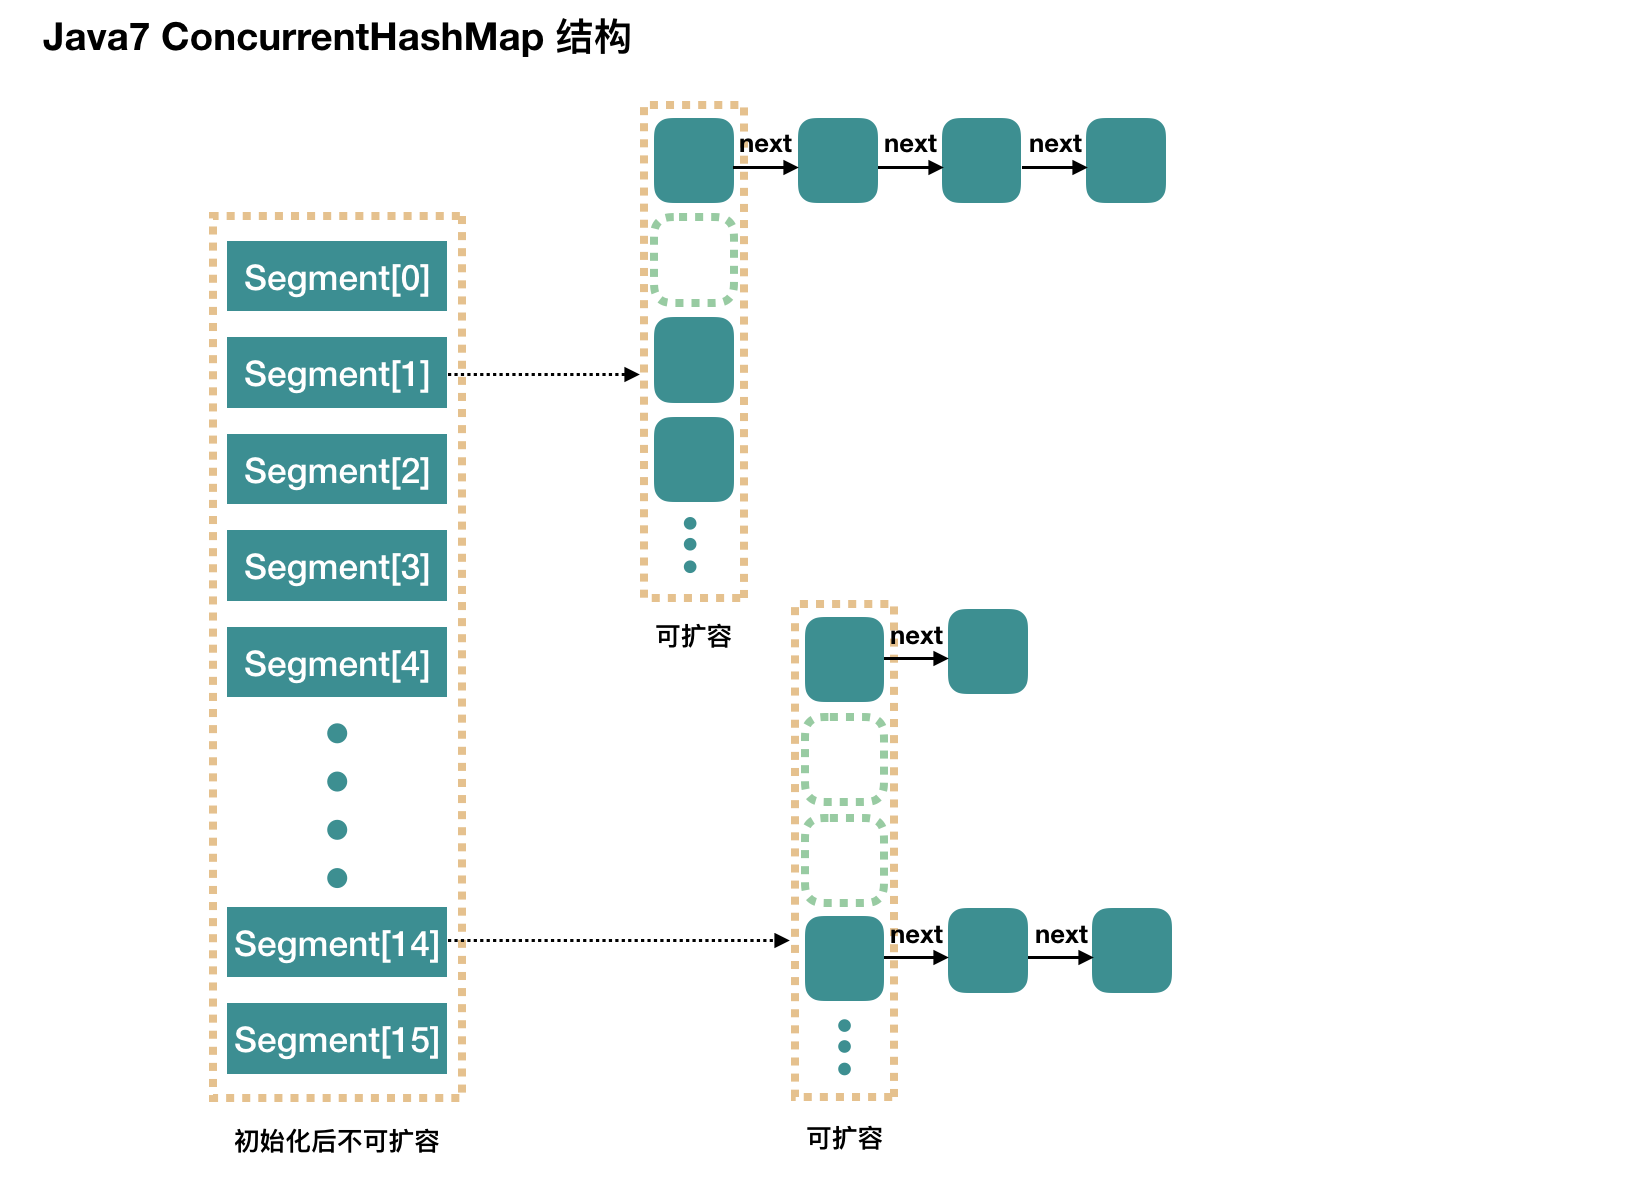 Hash java. CONCURRENTHASHMAP java. Map структура данных. Concurrent hash Map. CONCURRENTHASHMAP как устроена java.